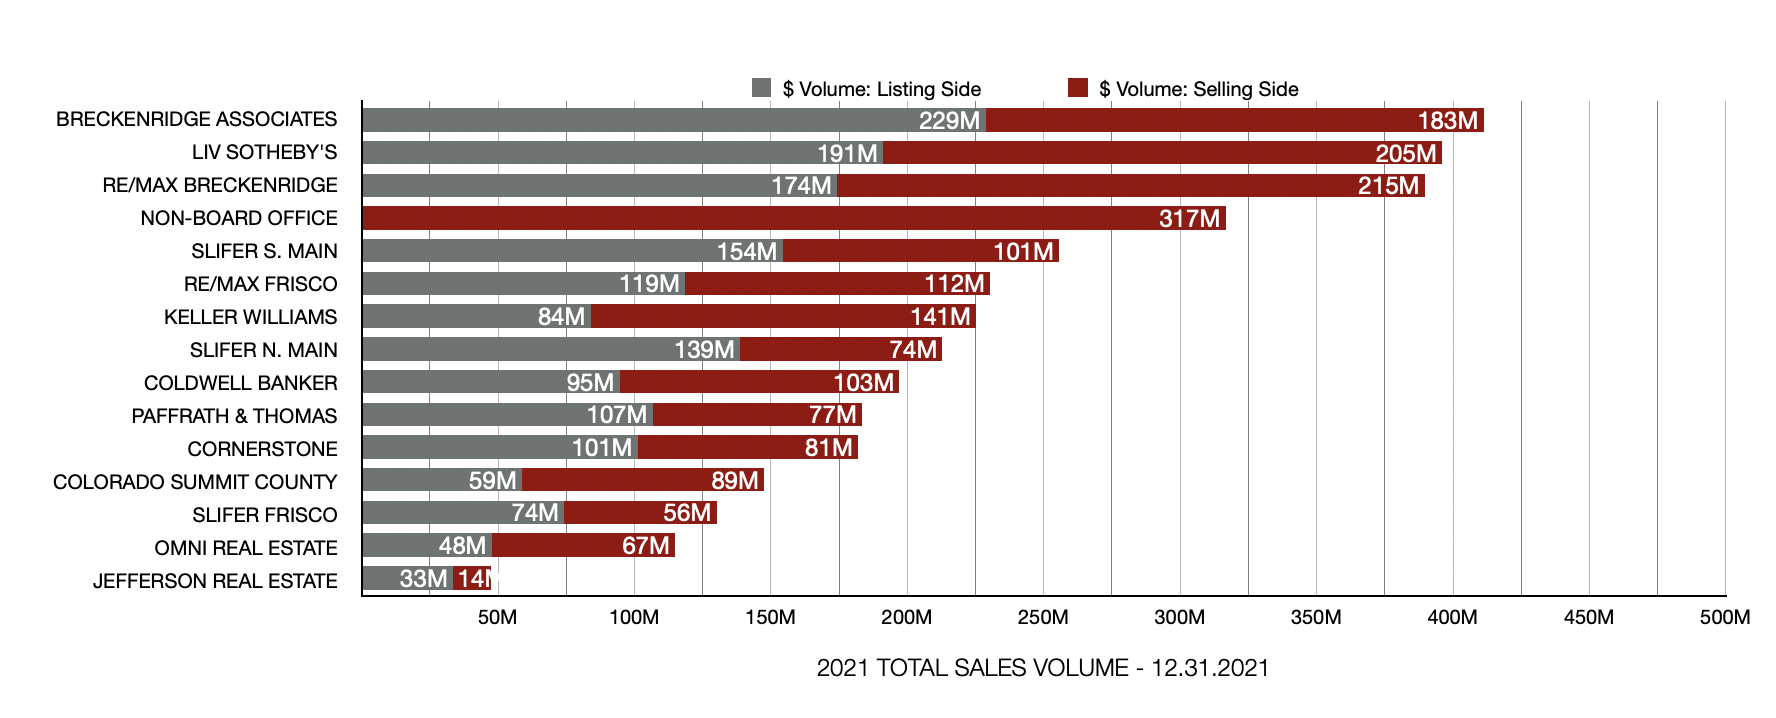 Total Breckenridge Real Estate Sales Volume 2021